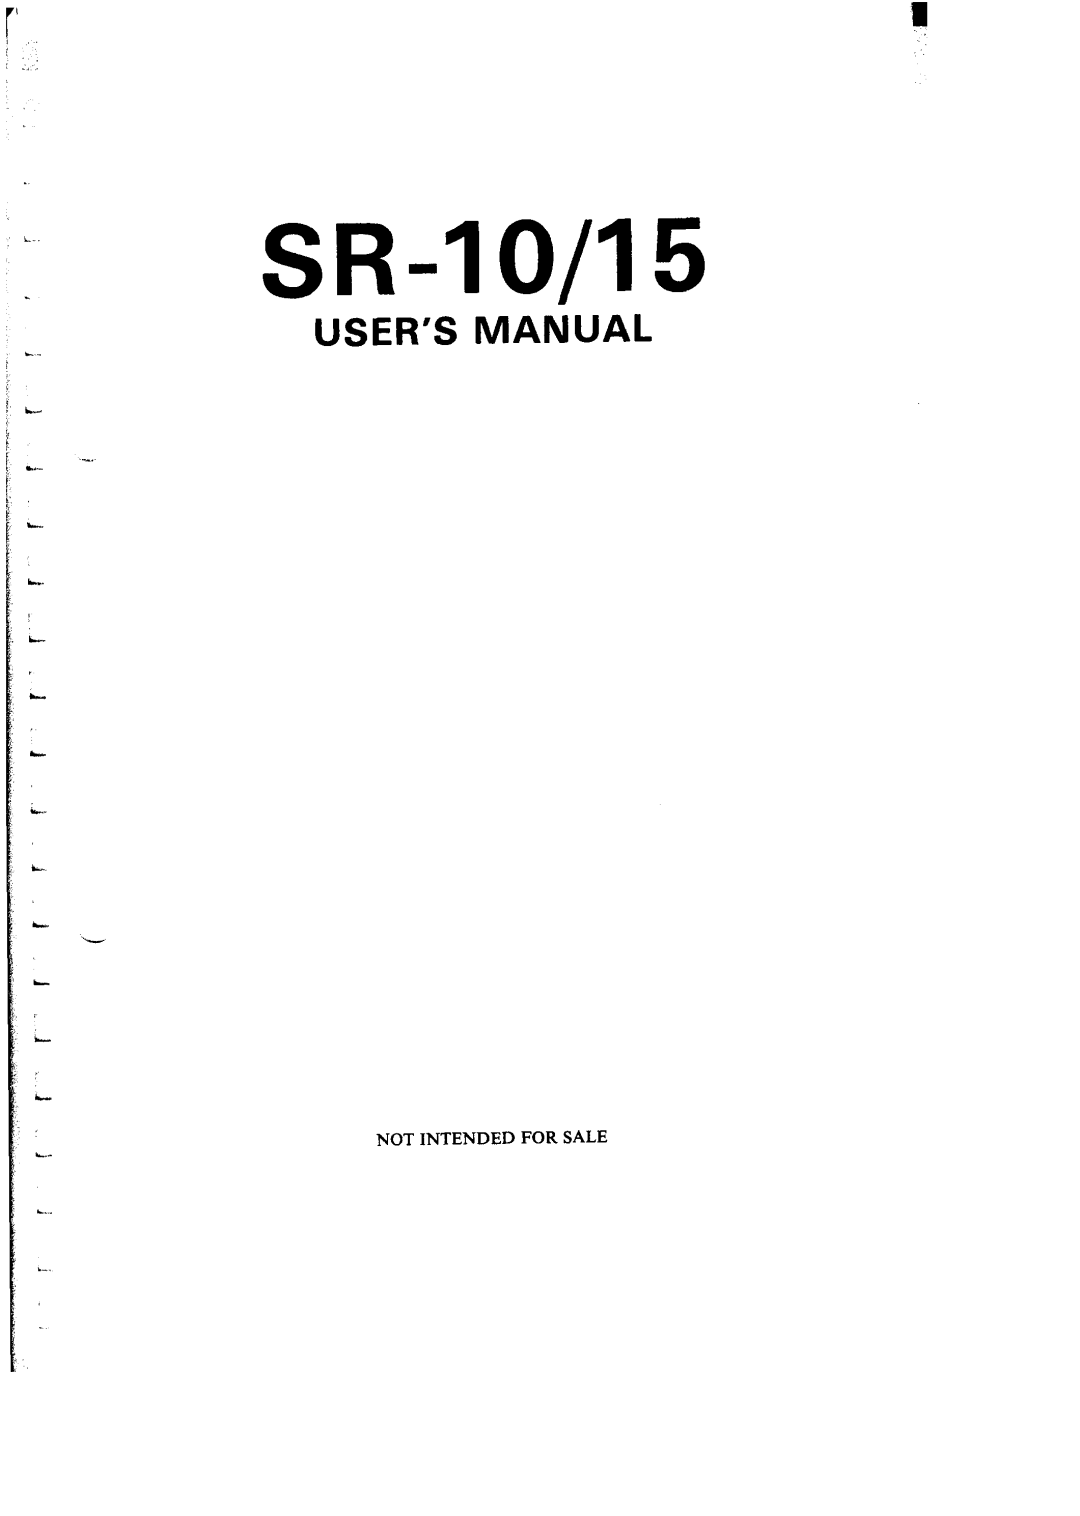 Star Micronics SR-10/I5 user manual SR-IO/I5, User’S Manual 